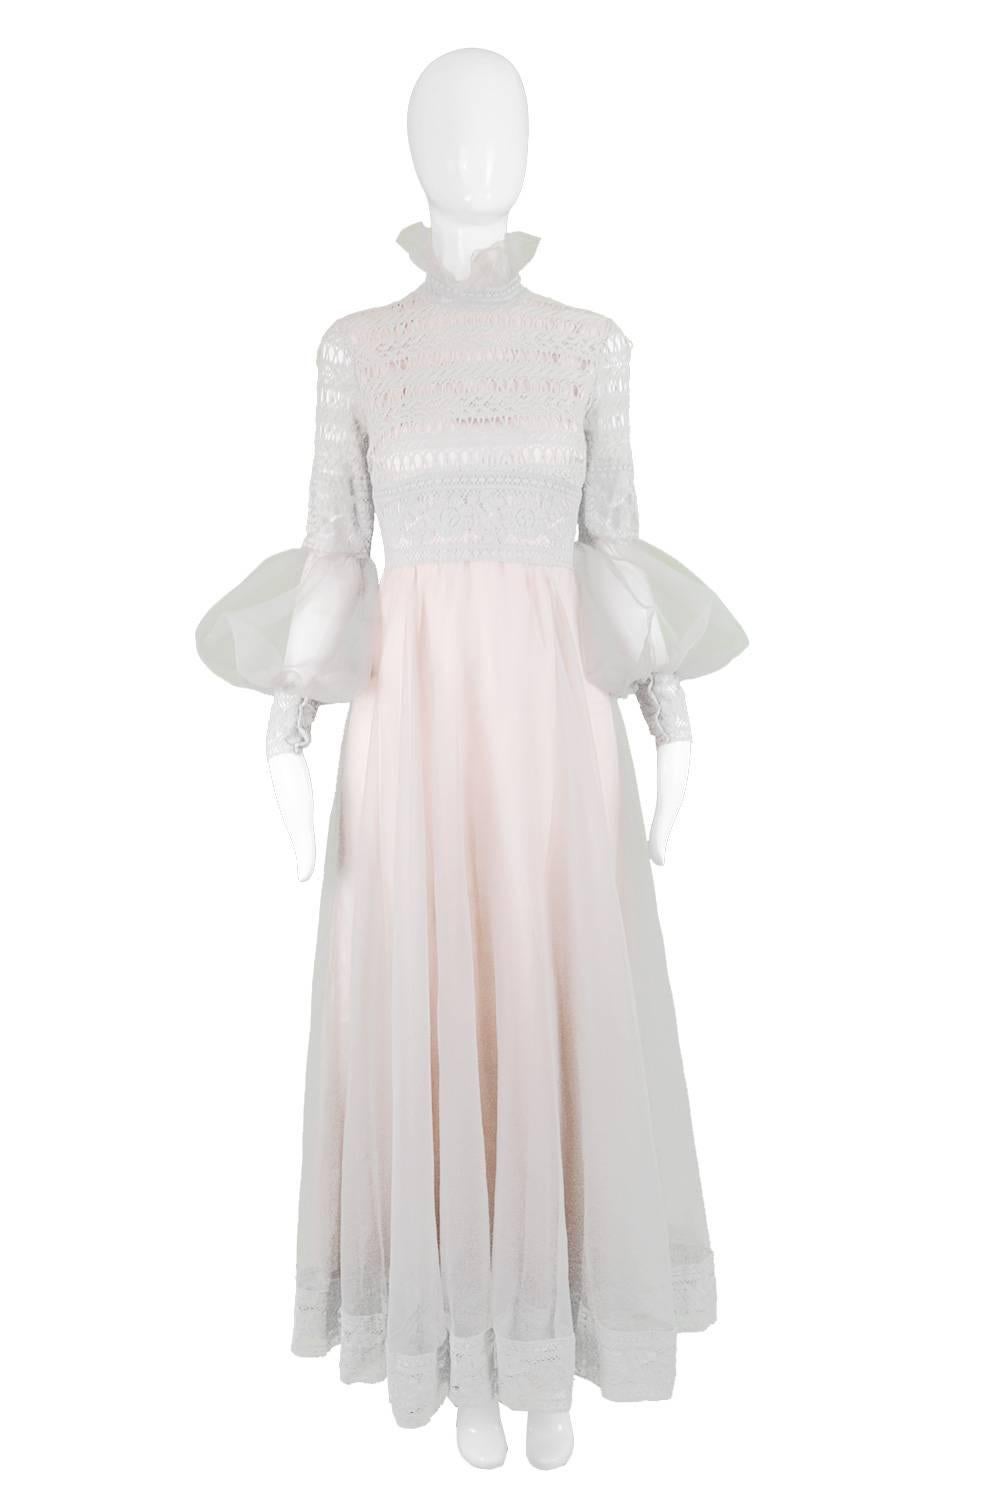 Jean Varon Vintage Gray & Pastel Pink Lace and Organza Evening Gown, 1970s

Estimated Size: UK 10 / US 6/ EU 38. Please check measurements.
Bust - 34” / 86cm
Waist - 28” / 71cm
Hips - 44” / 112cm
Length (Shoulder to Hem) - 53” / 135cm
Shoulder to